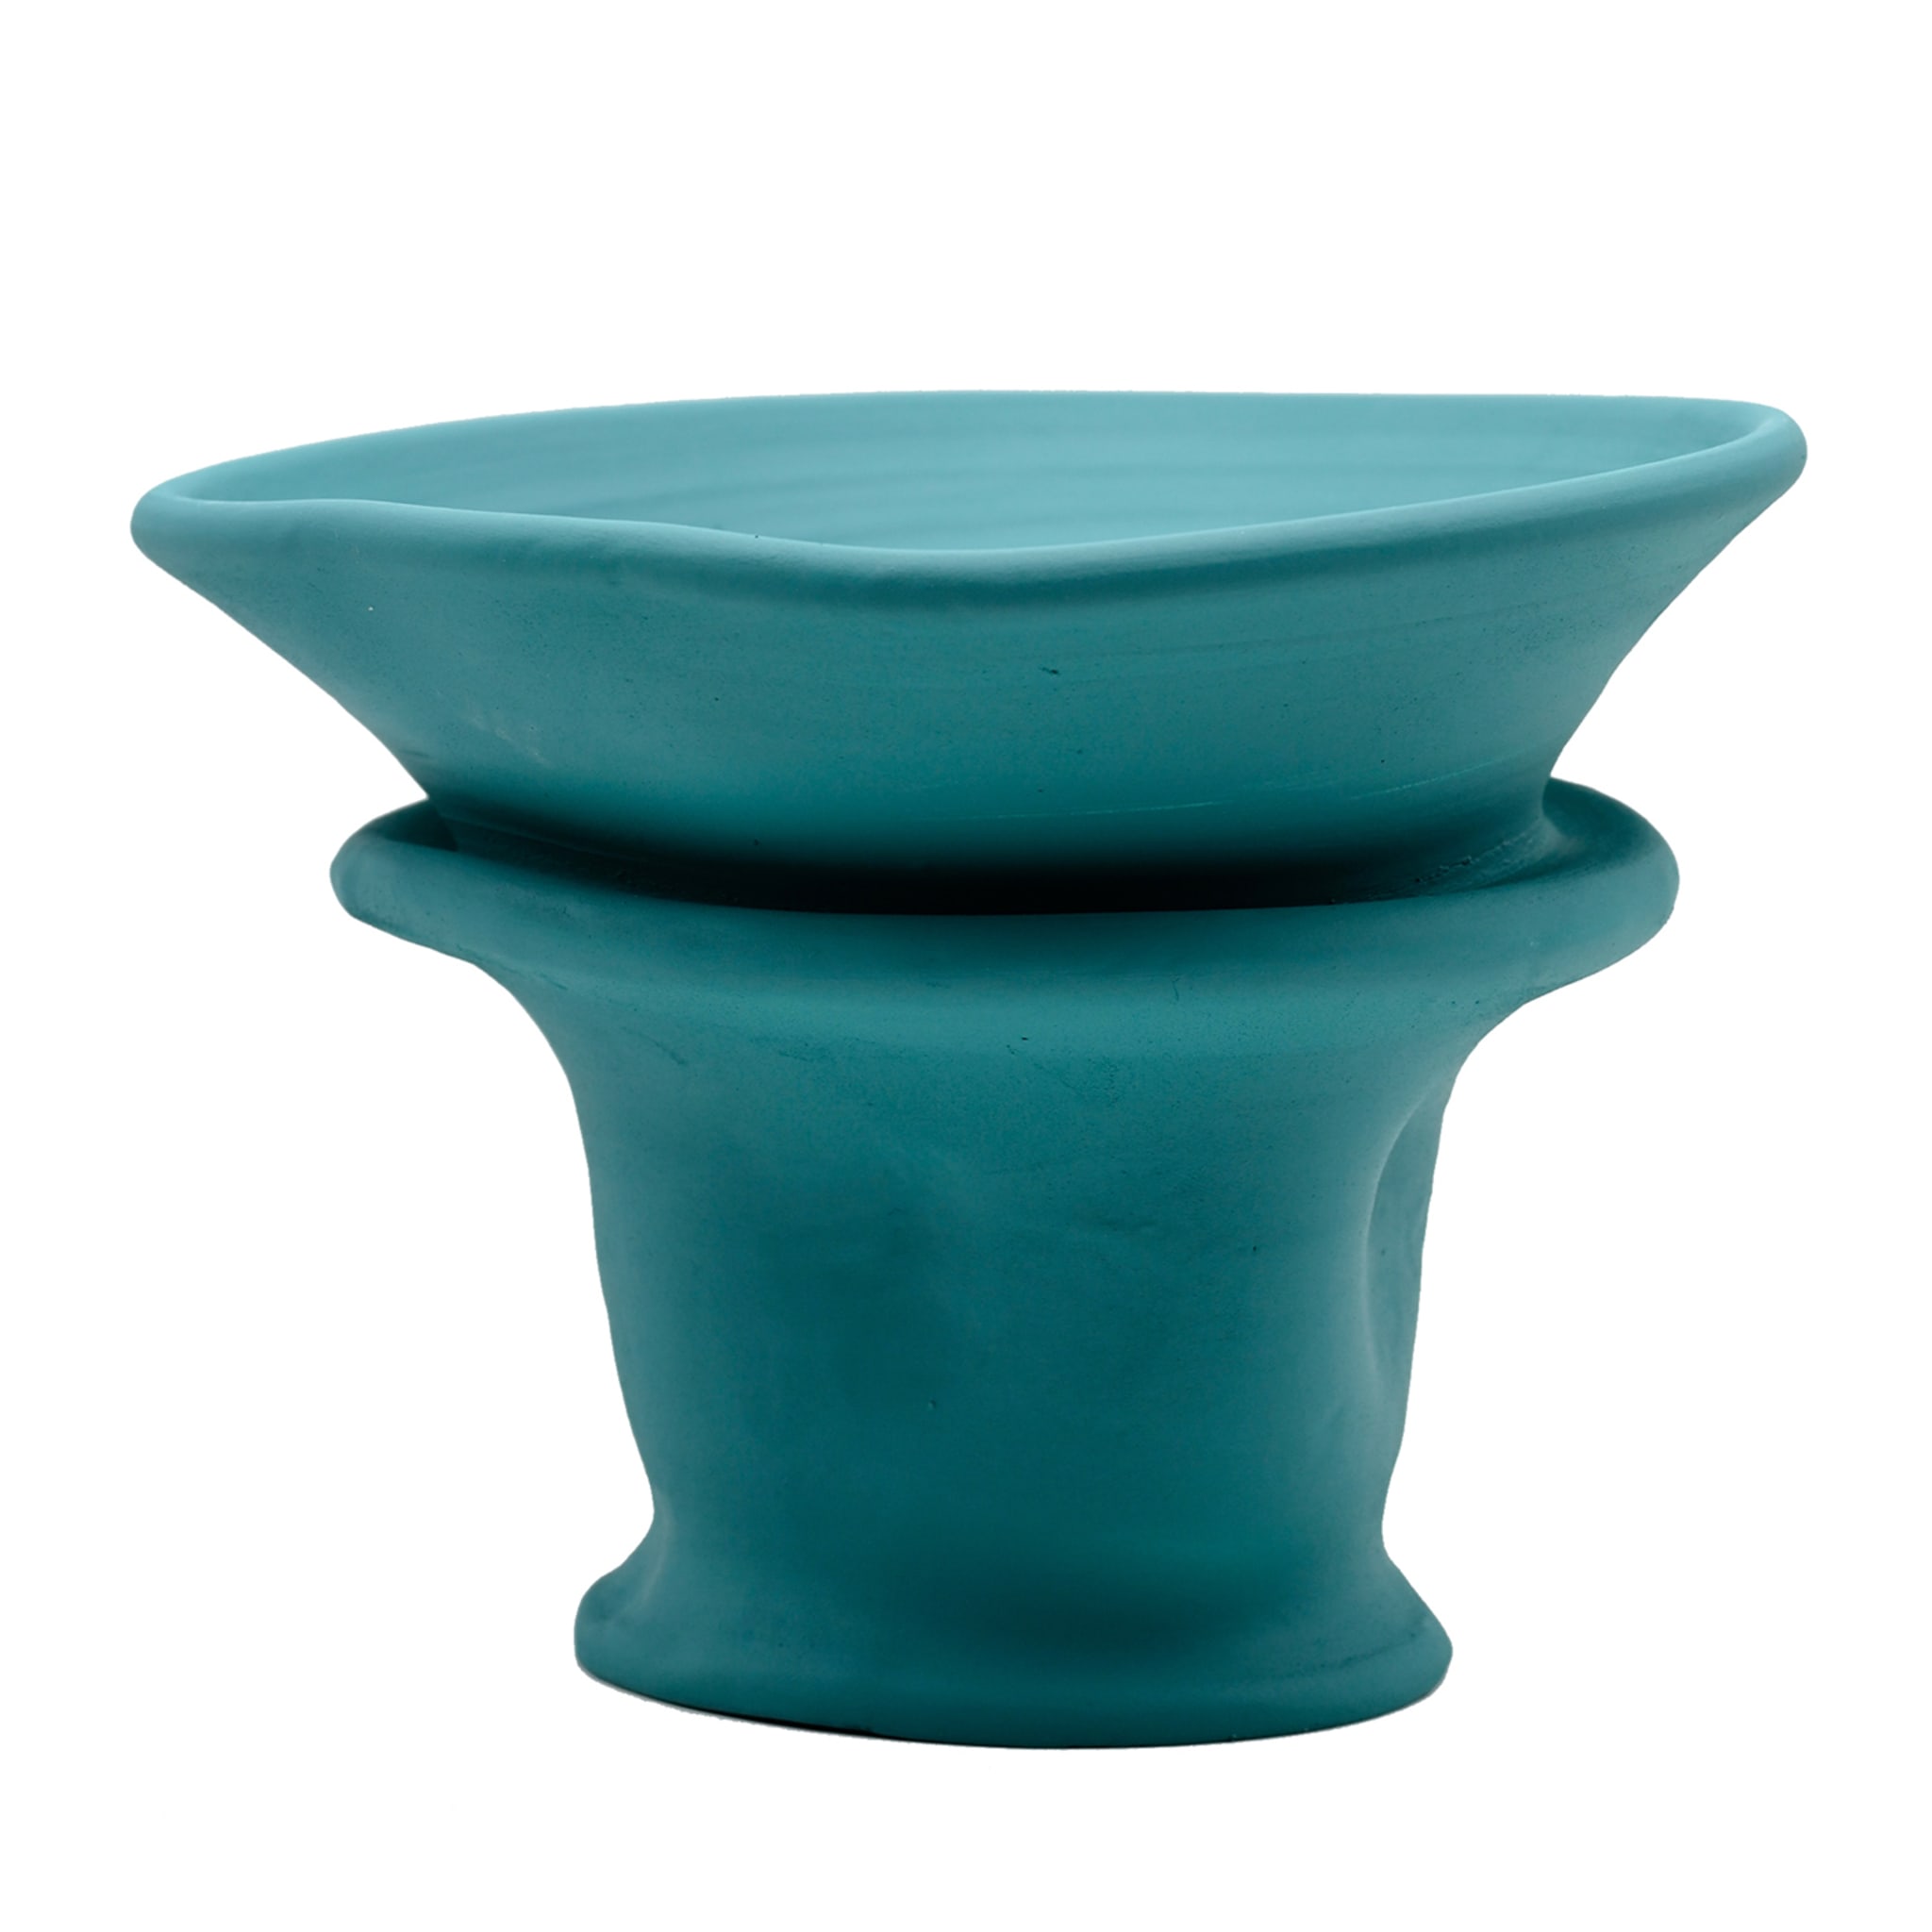 Turquoise Vase #2 - Main view